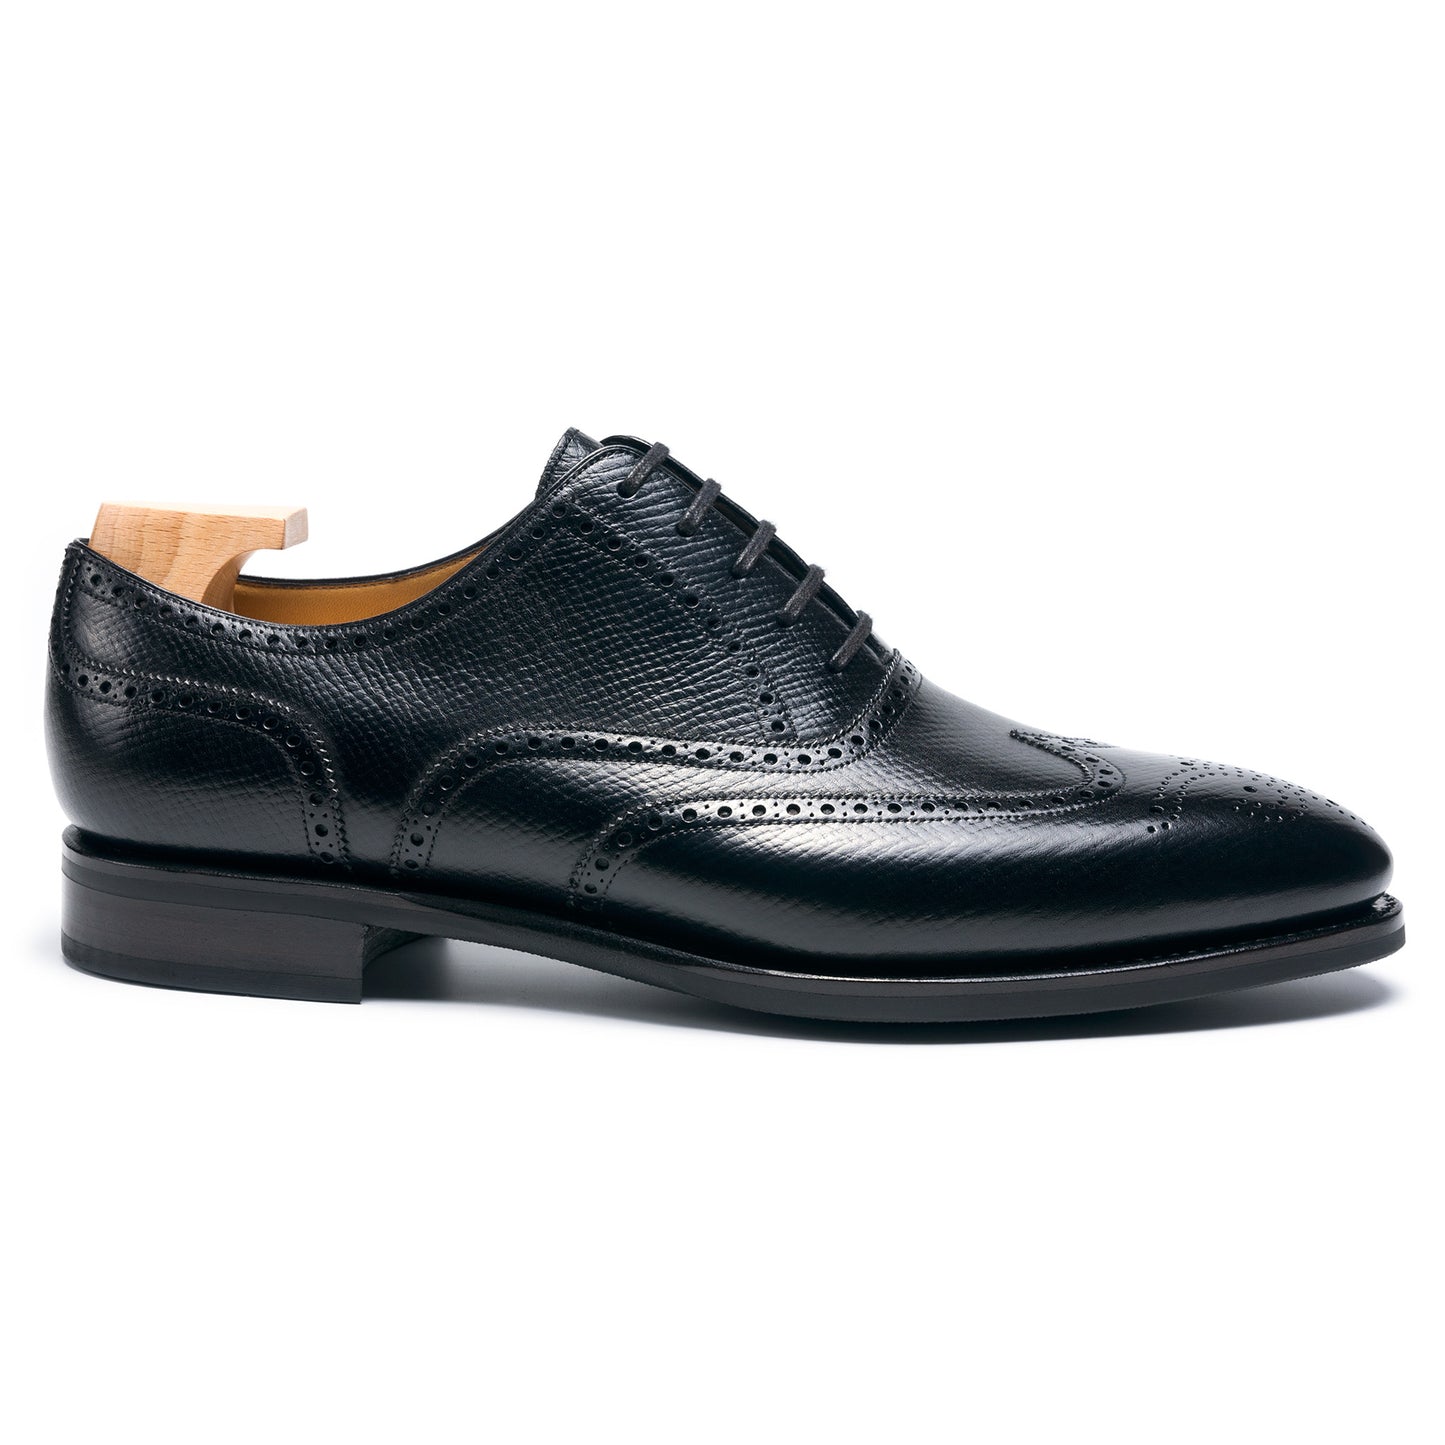 TLB Mallorca leather shoes 211 / GOYA / HATCH GRAIN BLACK